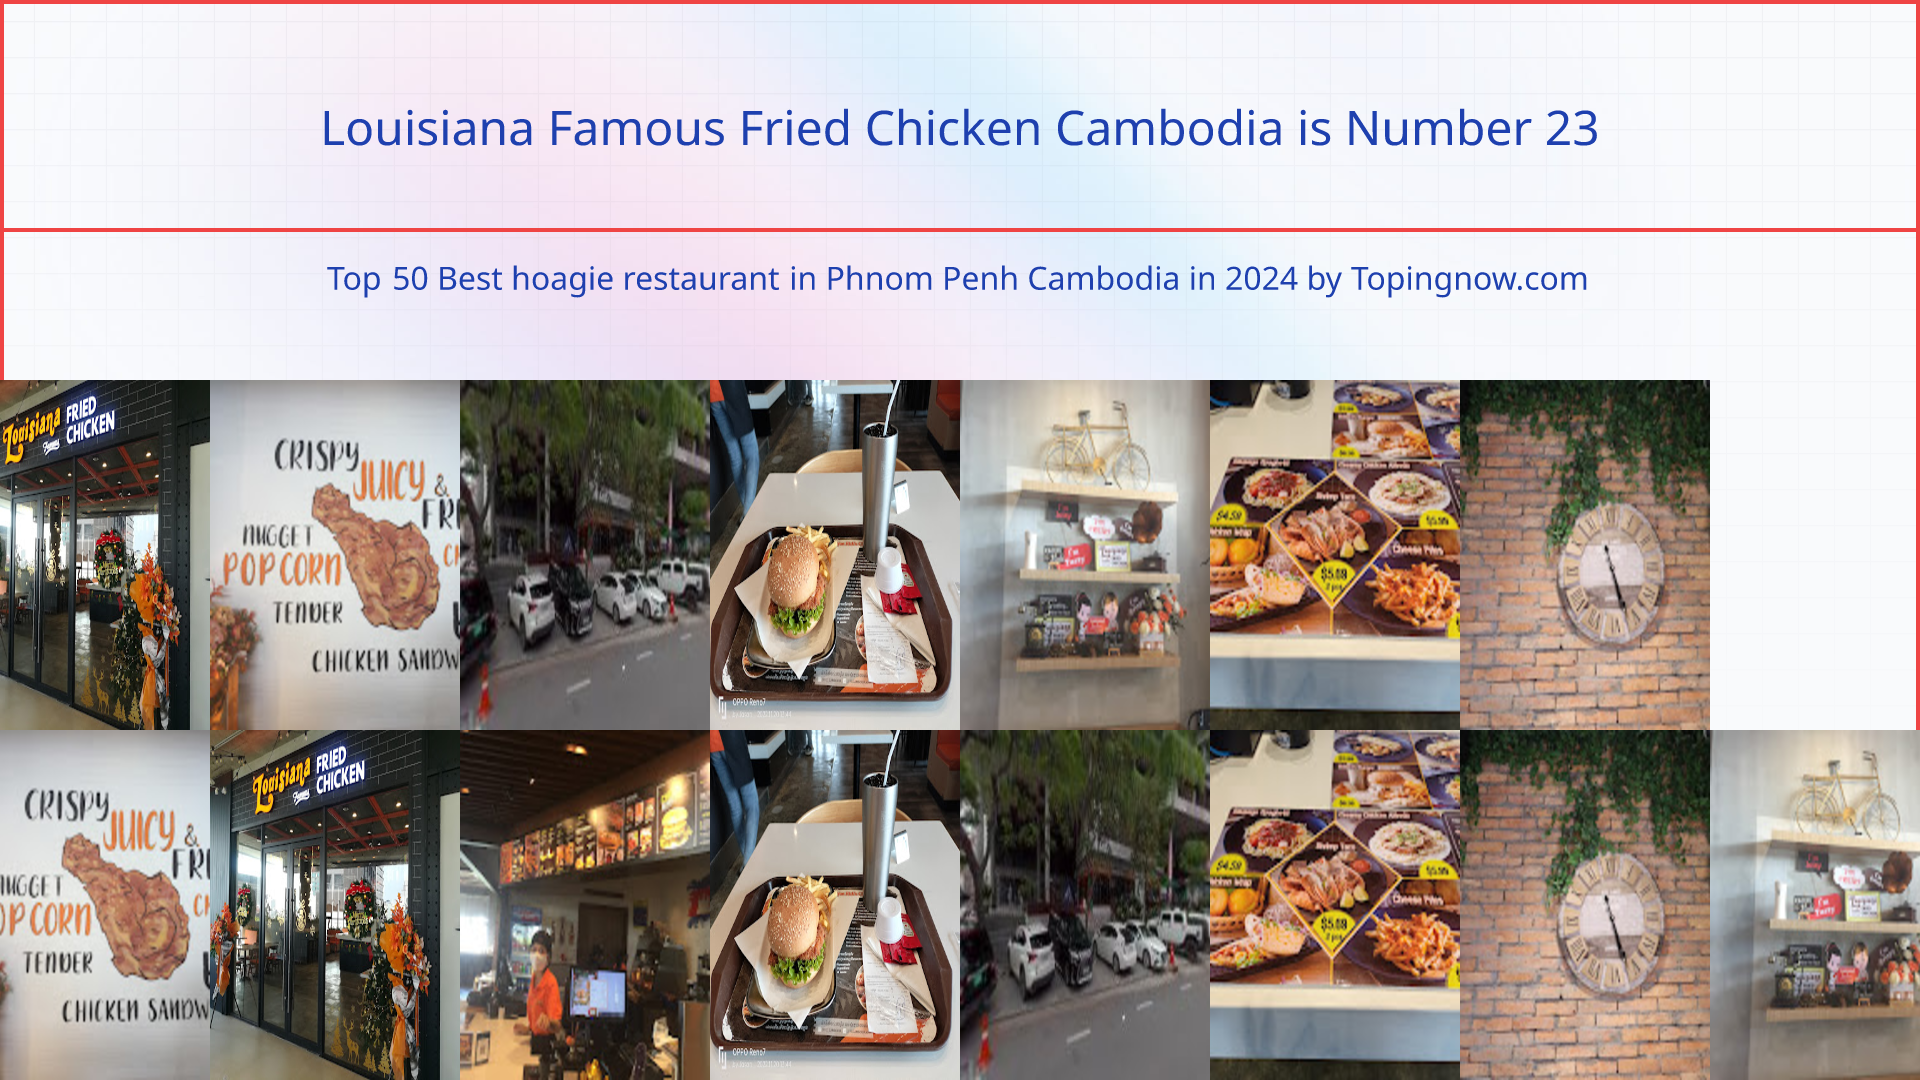 Louisiana Famous Fried Chicken Cambodia: Top 50 Best hoagie restaurant in Phnom Penh Cambodia in 2024